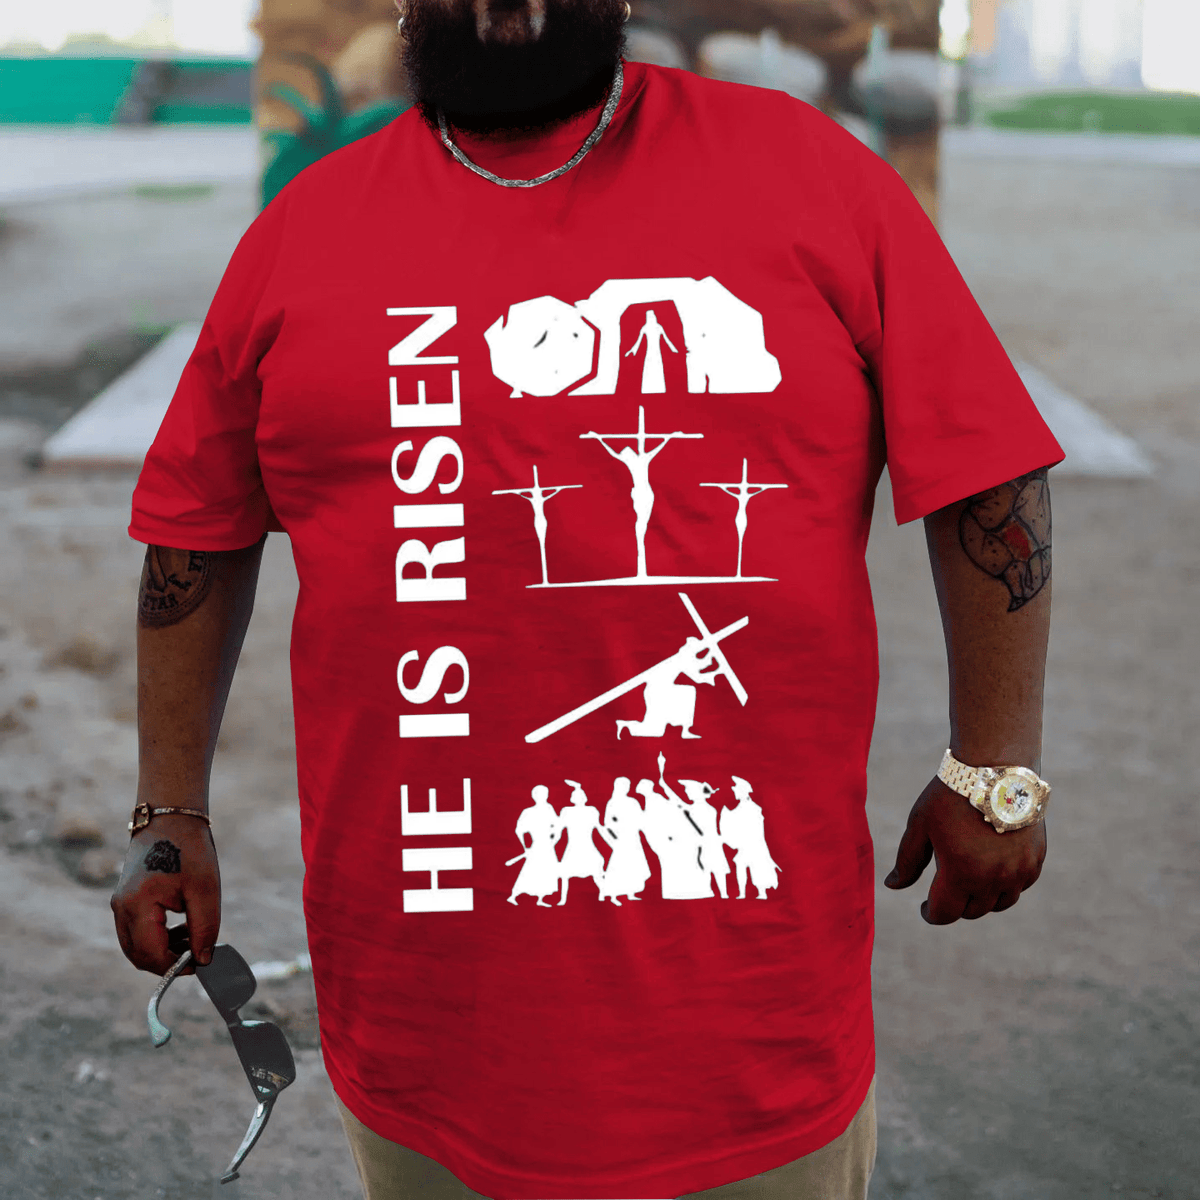 He is Risen Plus Size T-shirt